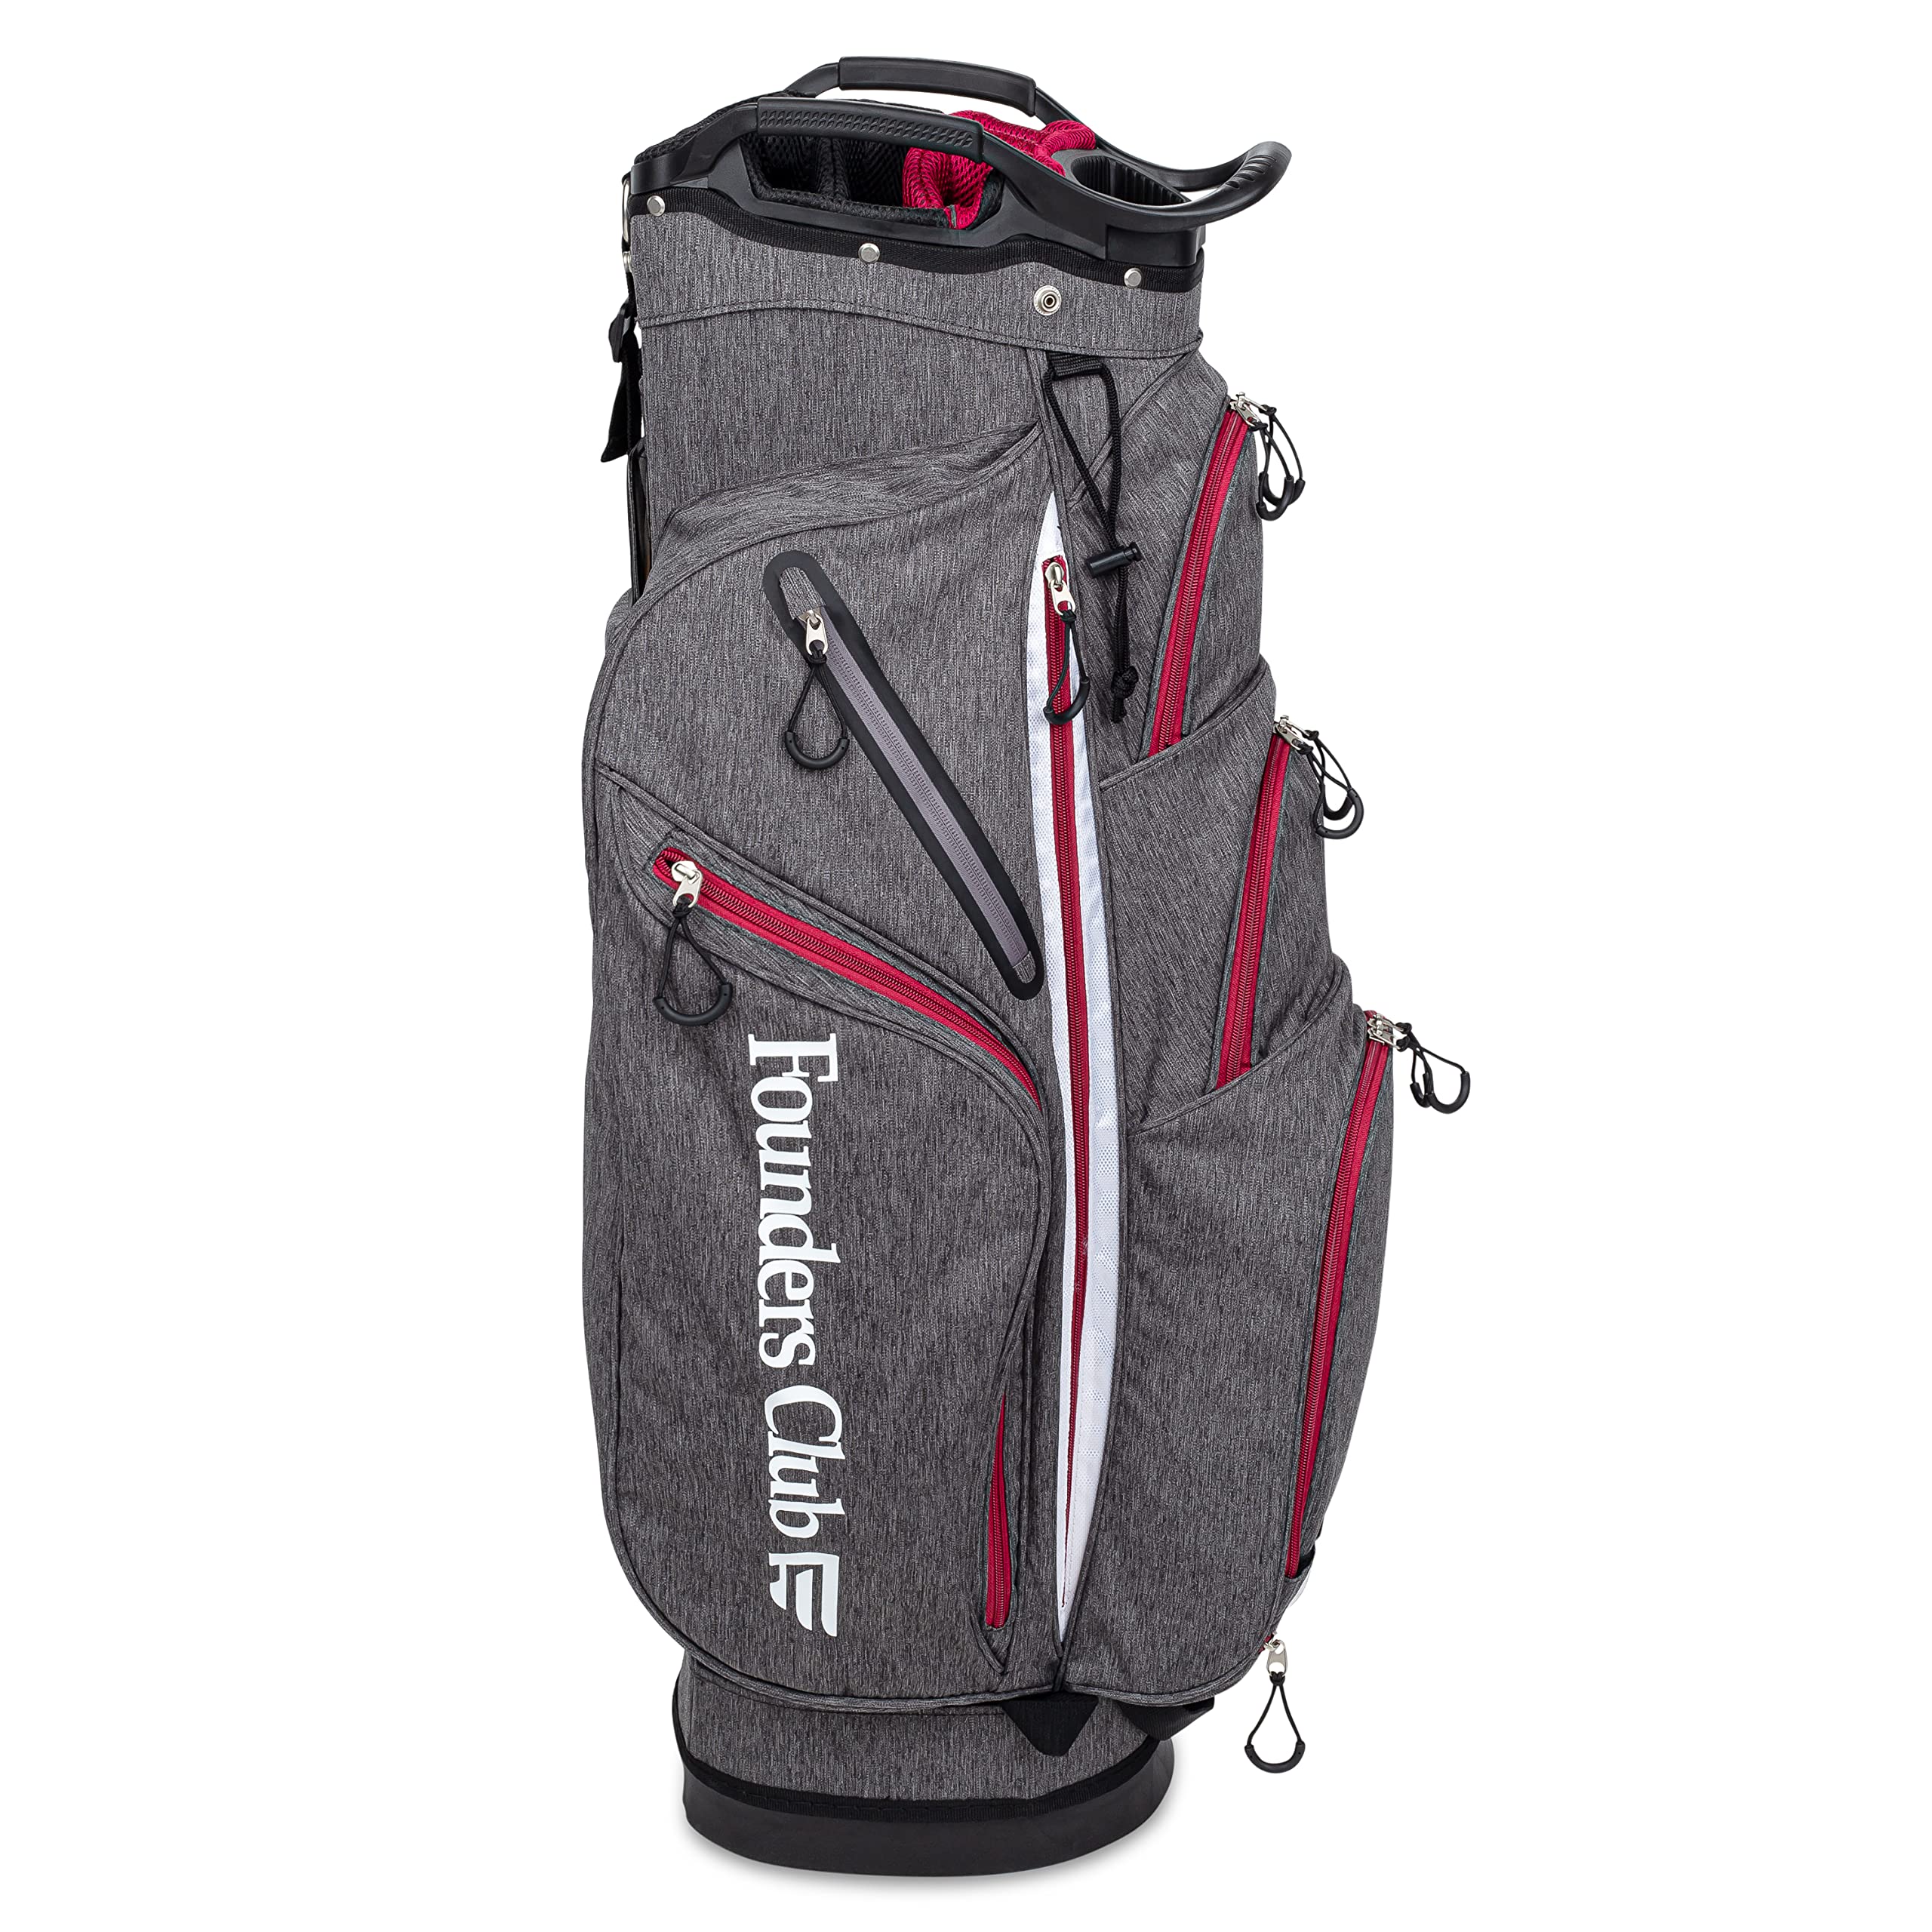 Founders Club Franklin Golf Push Cart Bag -Riding Cart Bag -Full Bag Rain Cover -Secure Push Cart Base -Light Weight -15 Way Ful